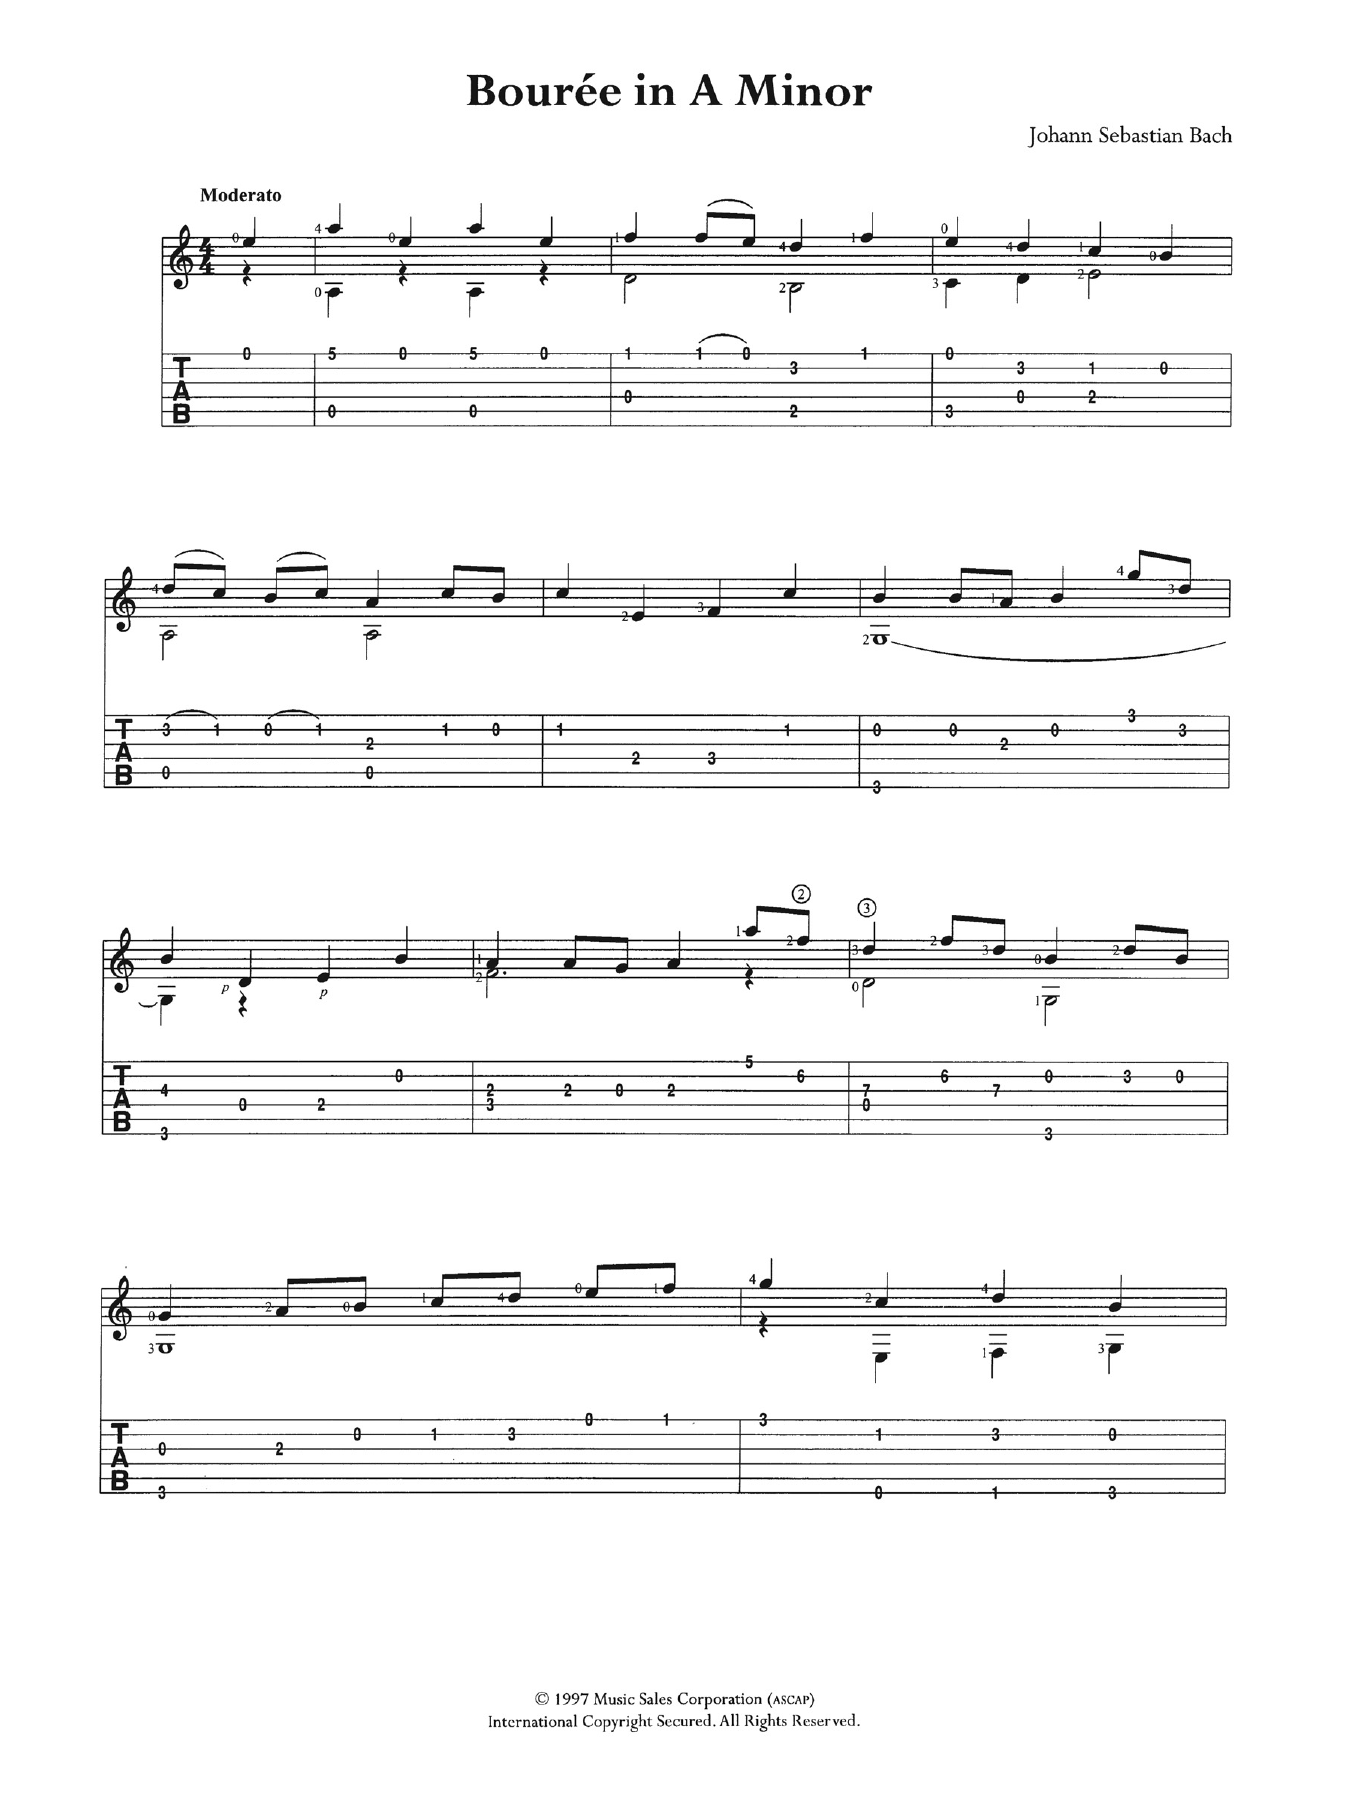 Johann Sebastian Bach Bouree in A Minor Sheet Music Notes & Chords for Guitar Tab - Download or Print PDF